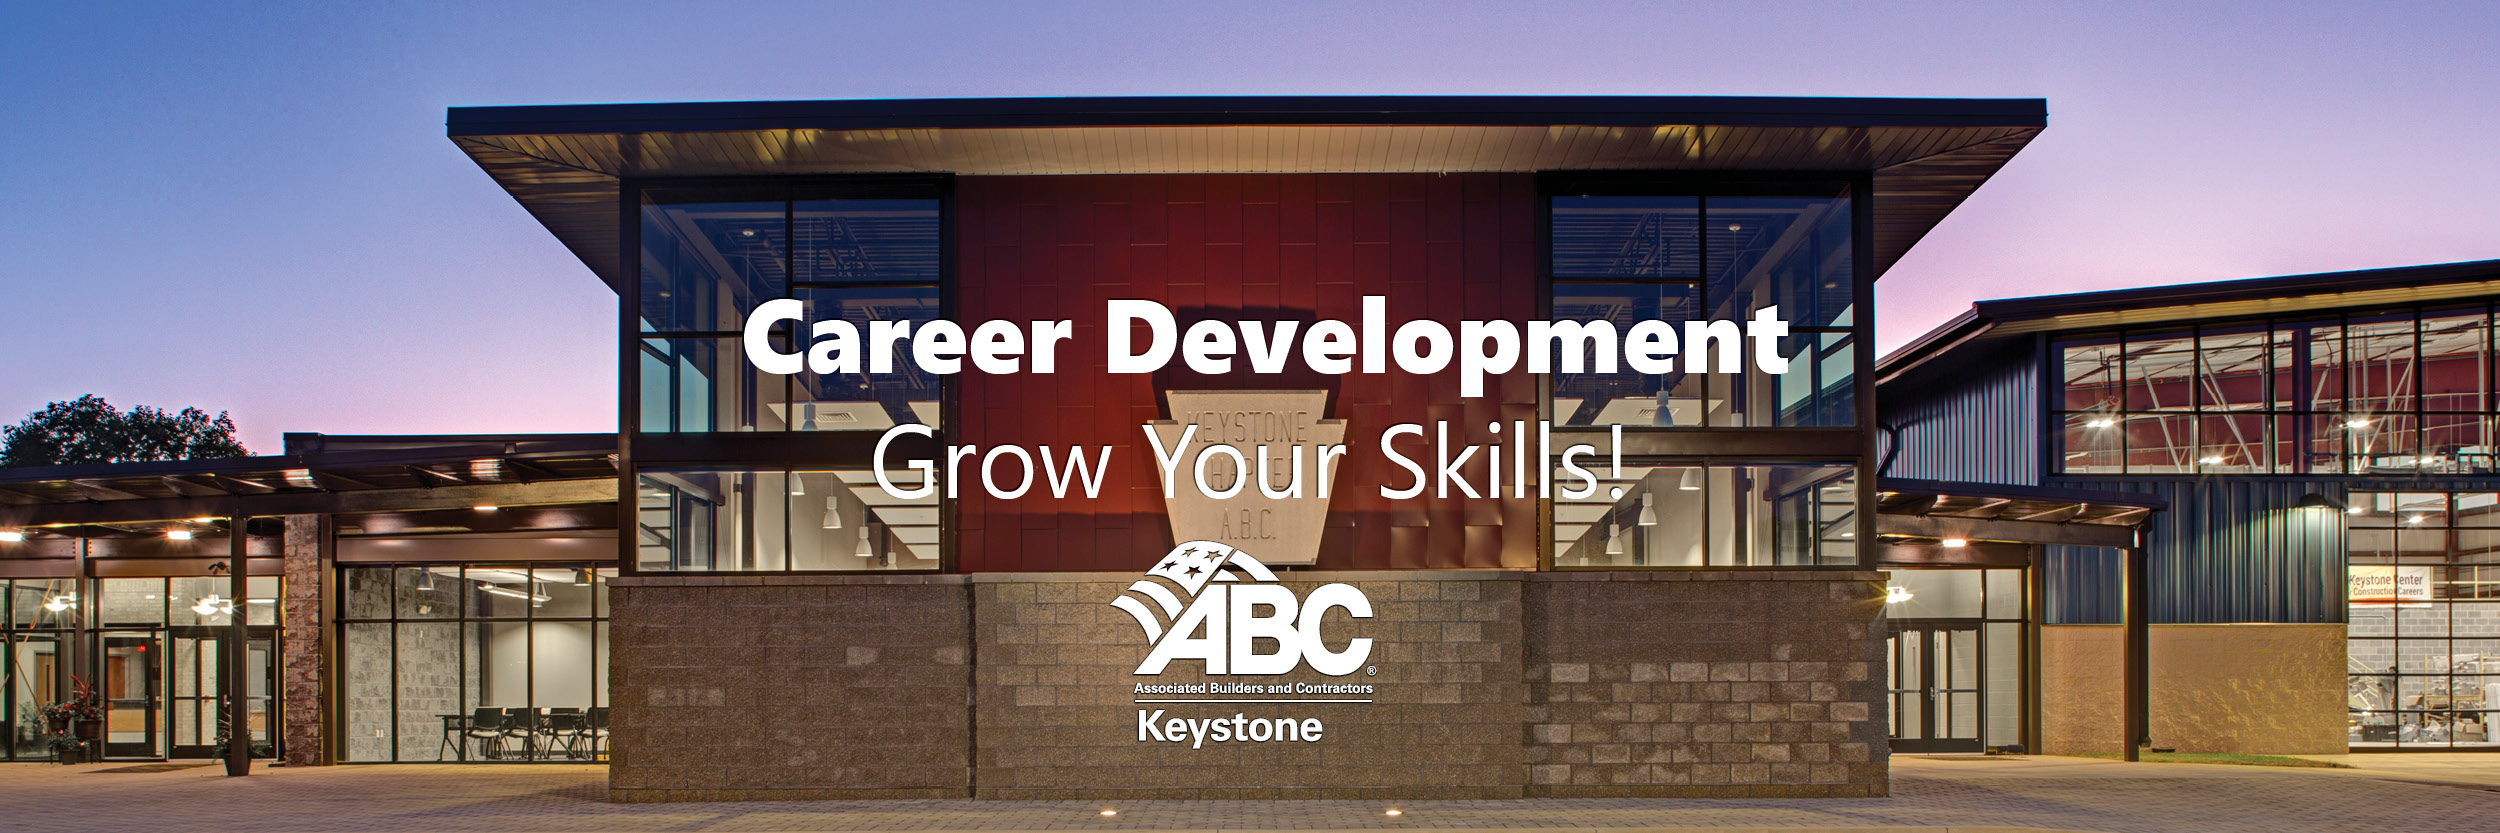 Career Development ABC Keystone